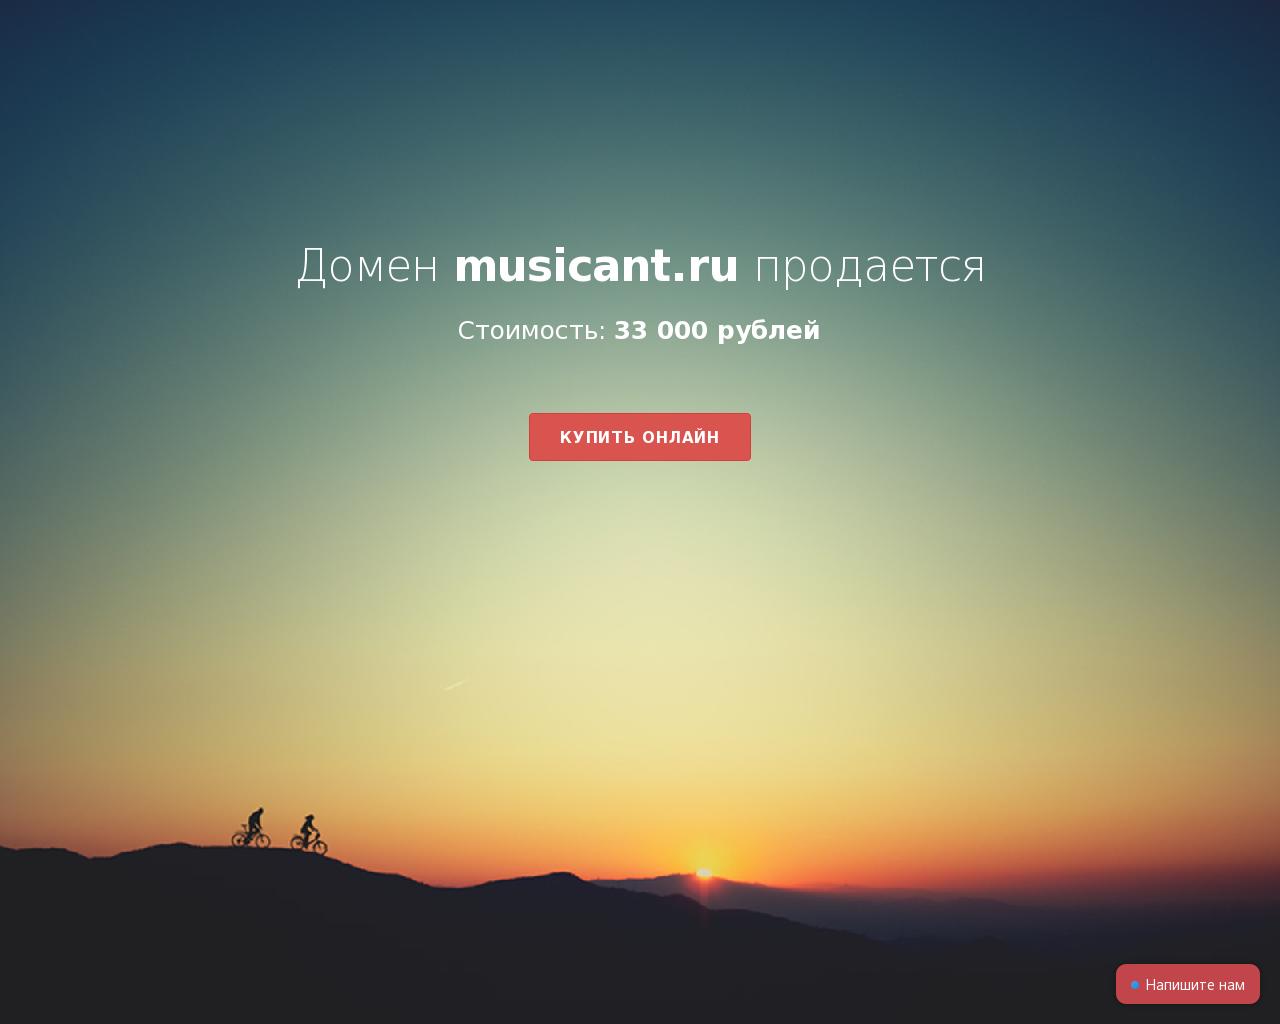 Изображение сайта musicant.ru в разрешении 1280x1024